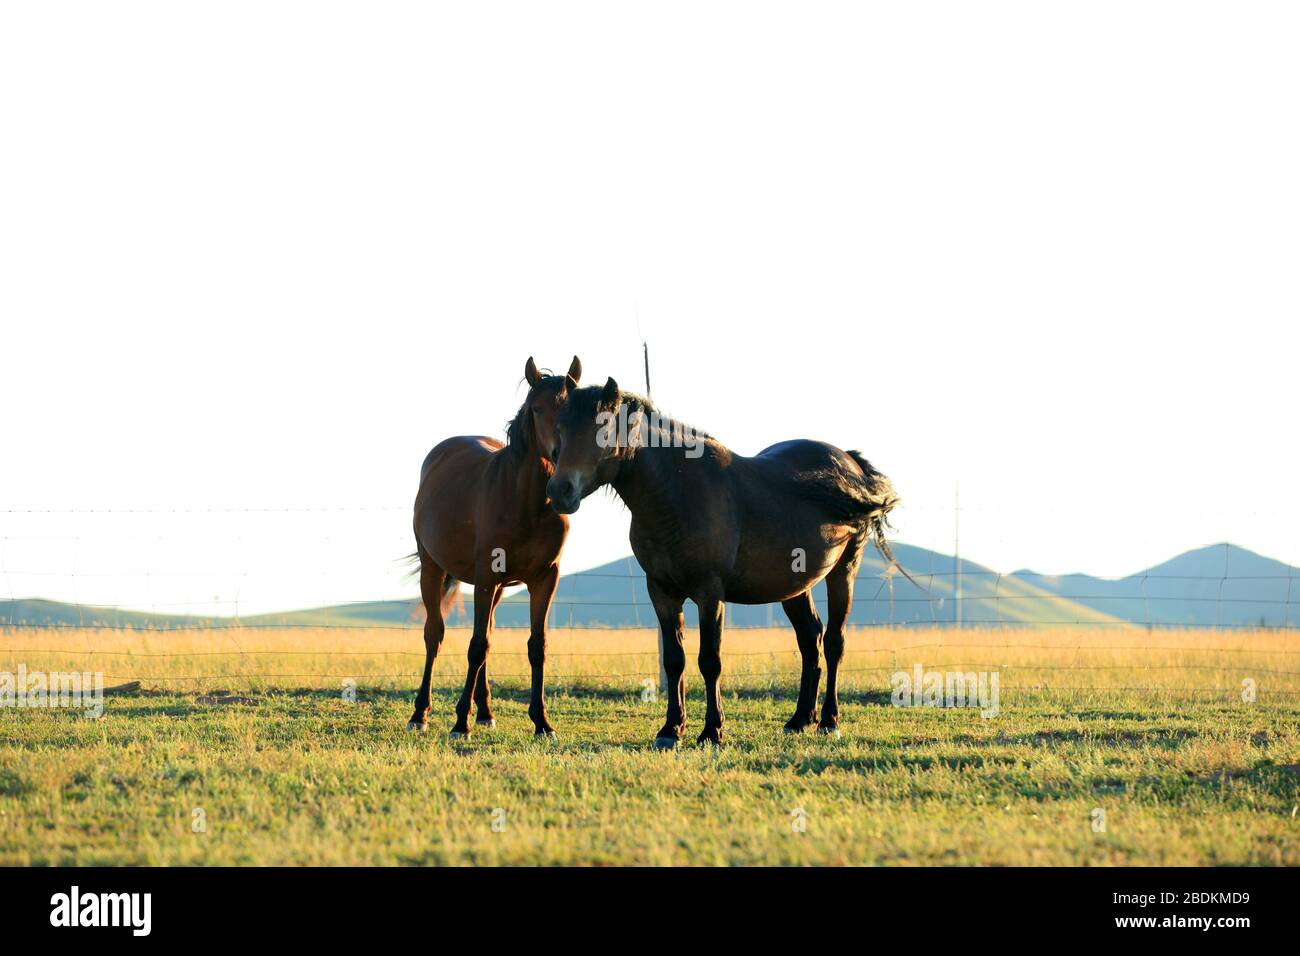 The horses grazed on the grassland Stock Photo